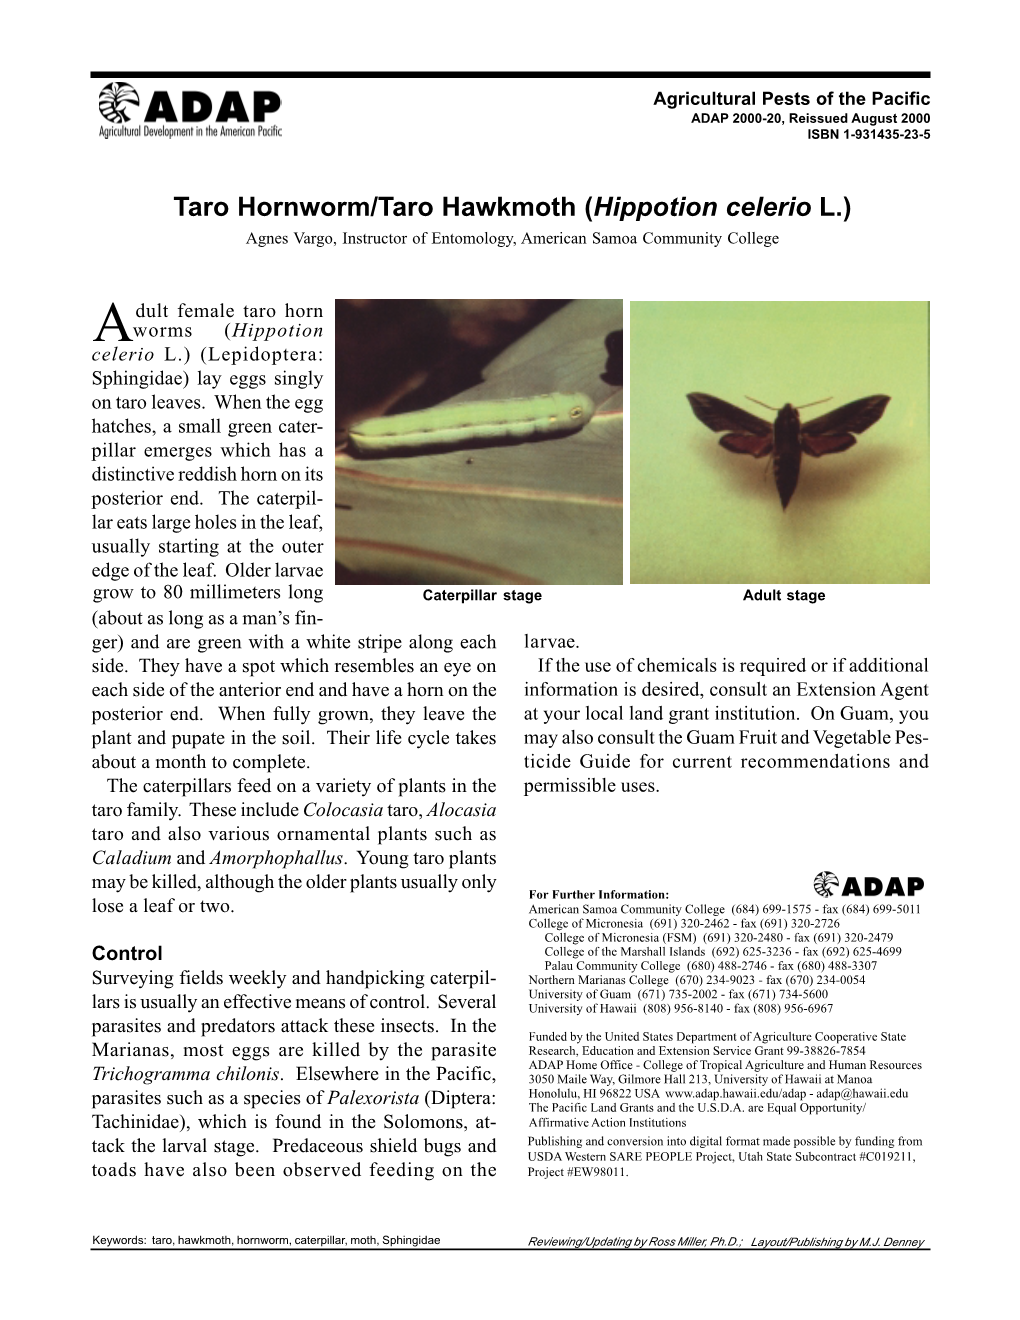 Taro Hornworm/Taro Hawkmoth (Hippotion Celerio L.) Agnes Vargo, Instructor of Entomology, American Samoa Community College